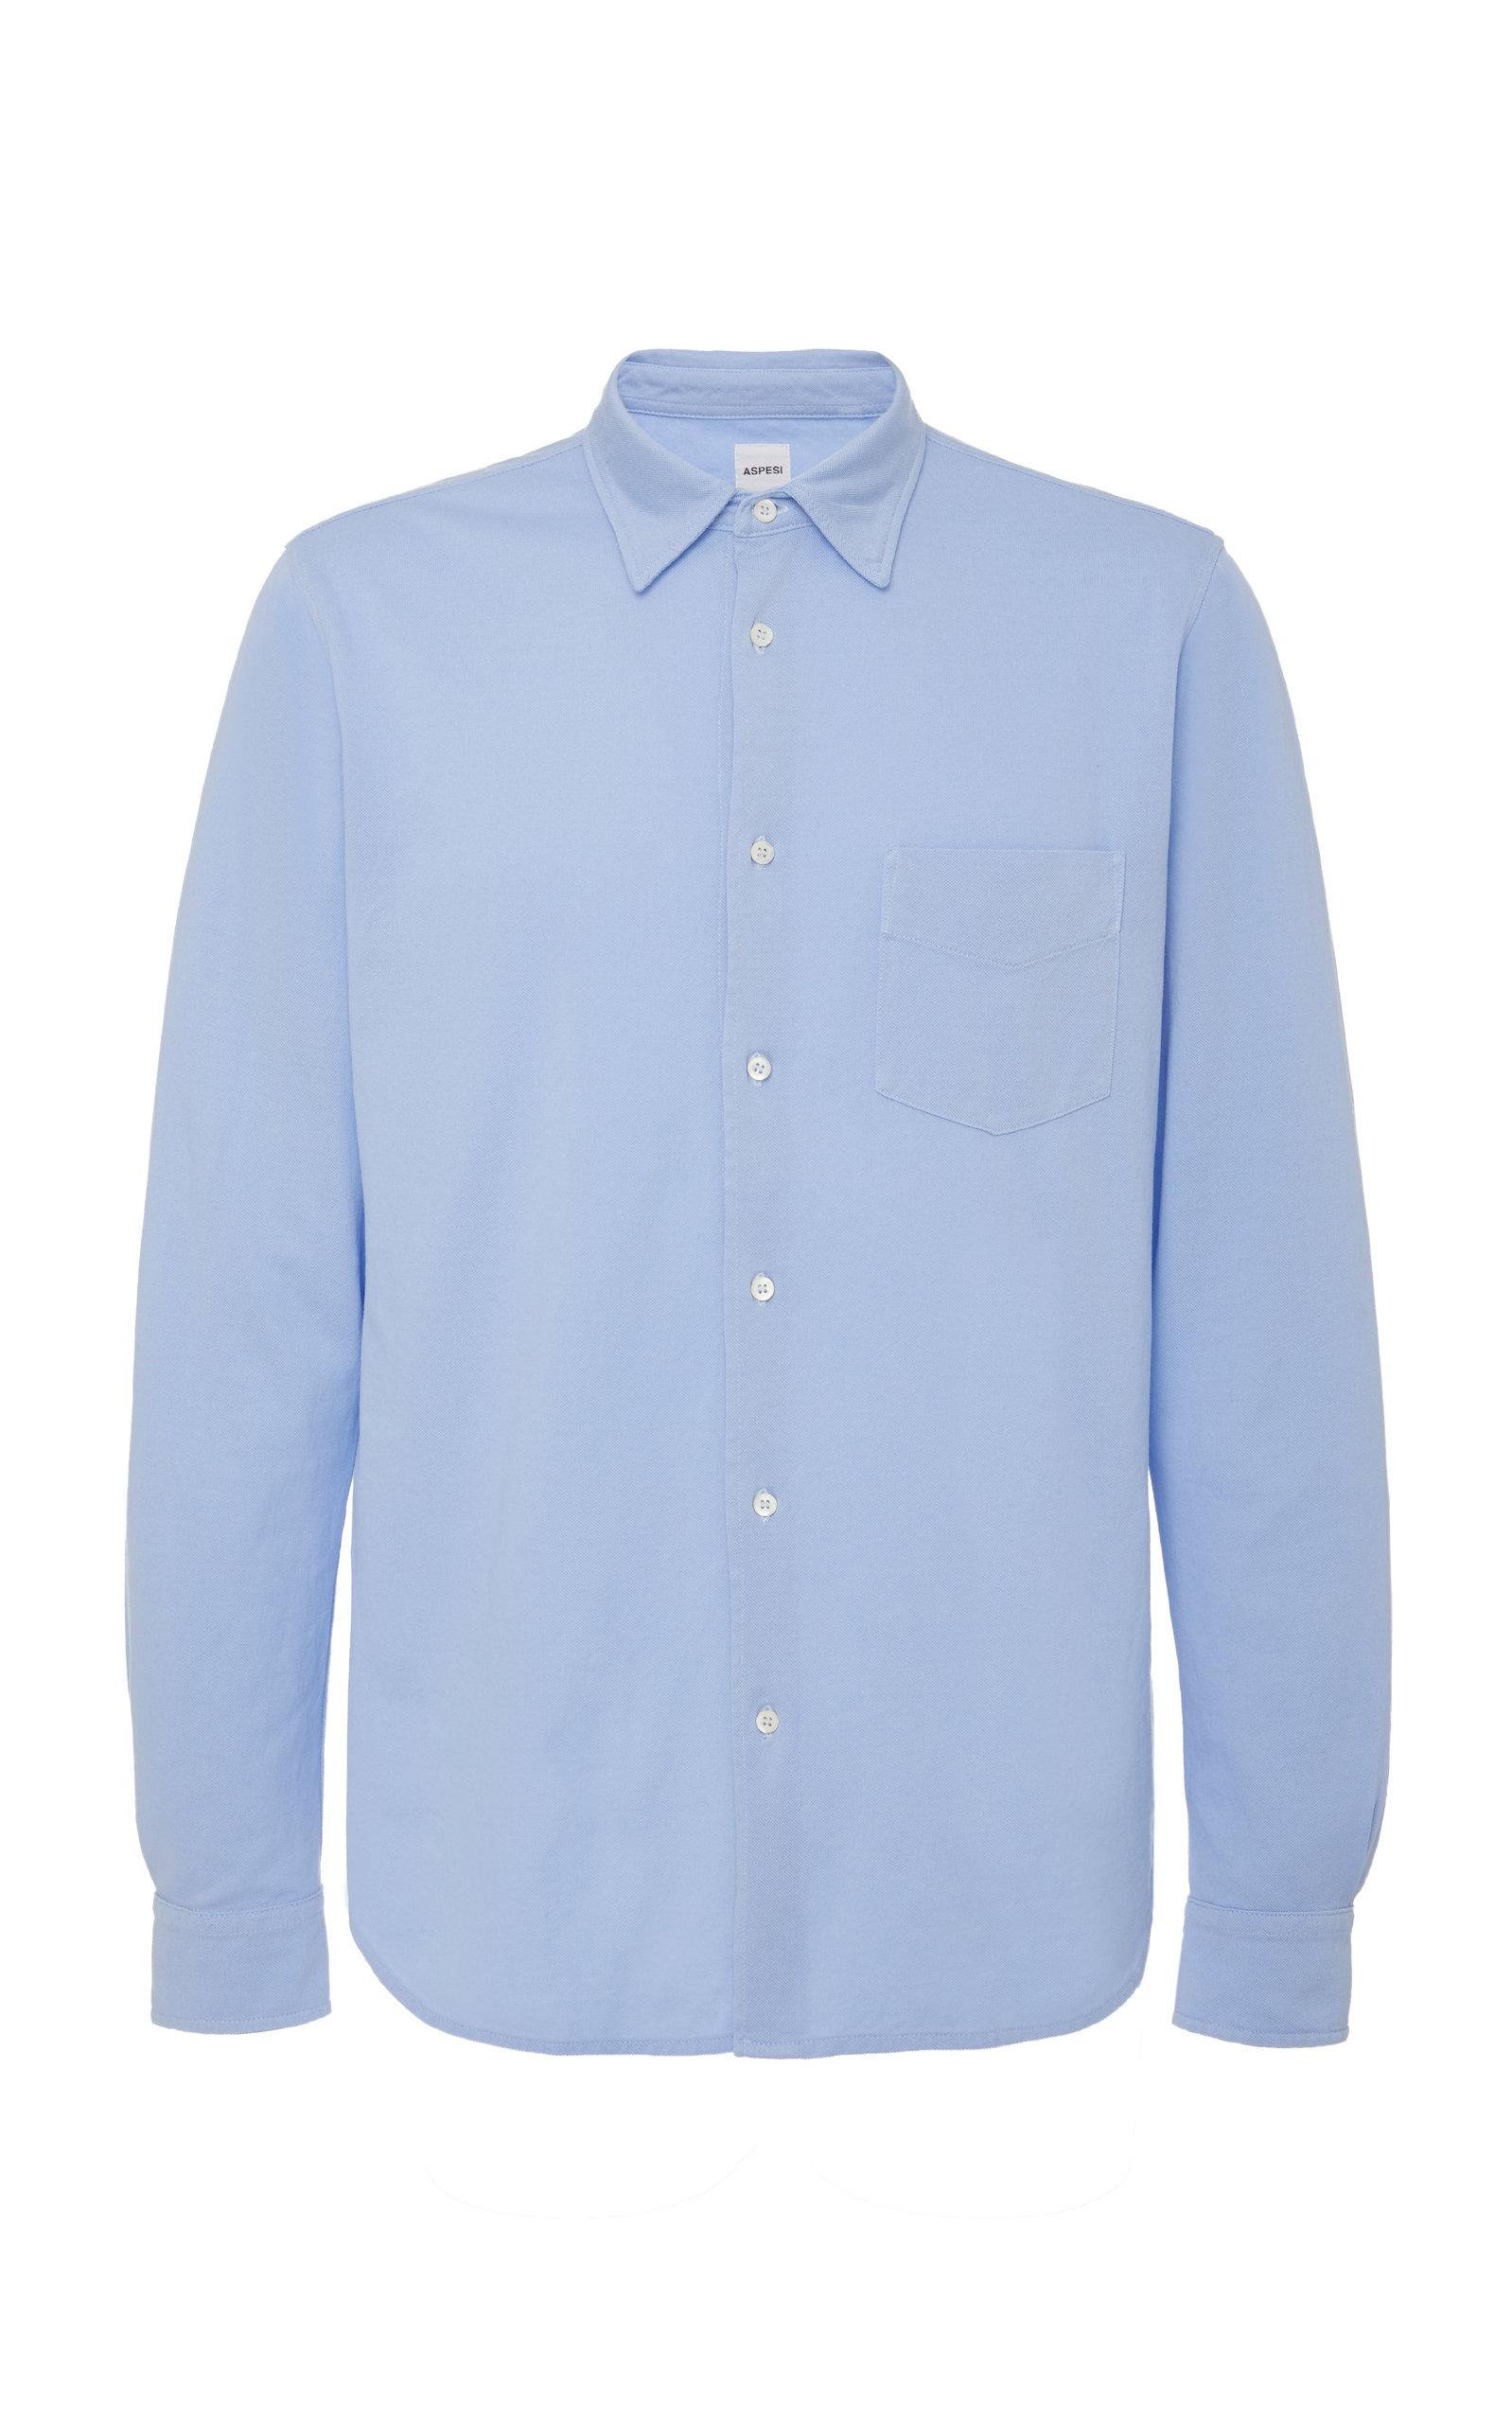 Aspesi Cotton-jersey Button-up Shirt in Blue for Men - Lyst